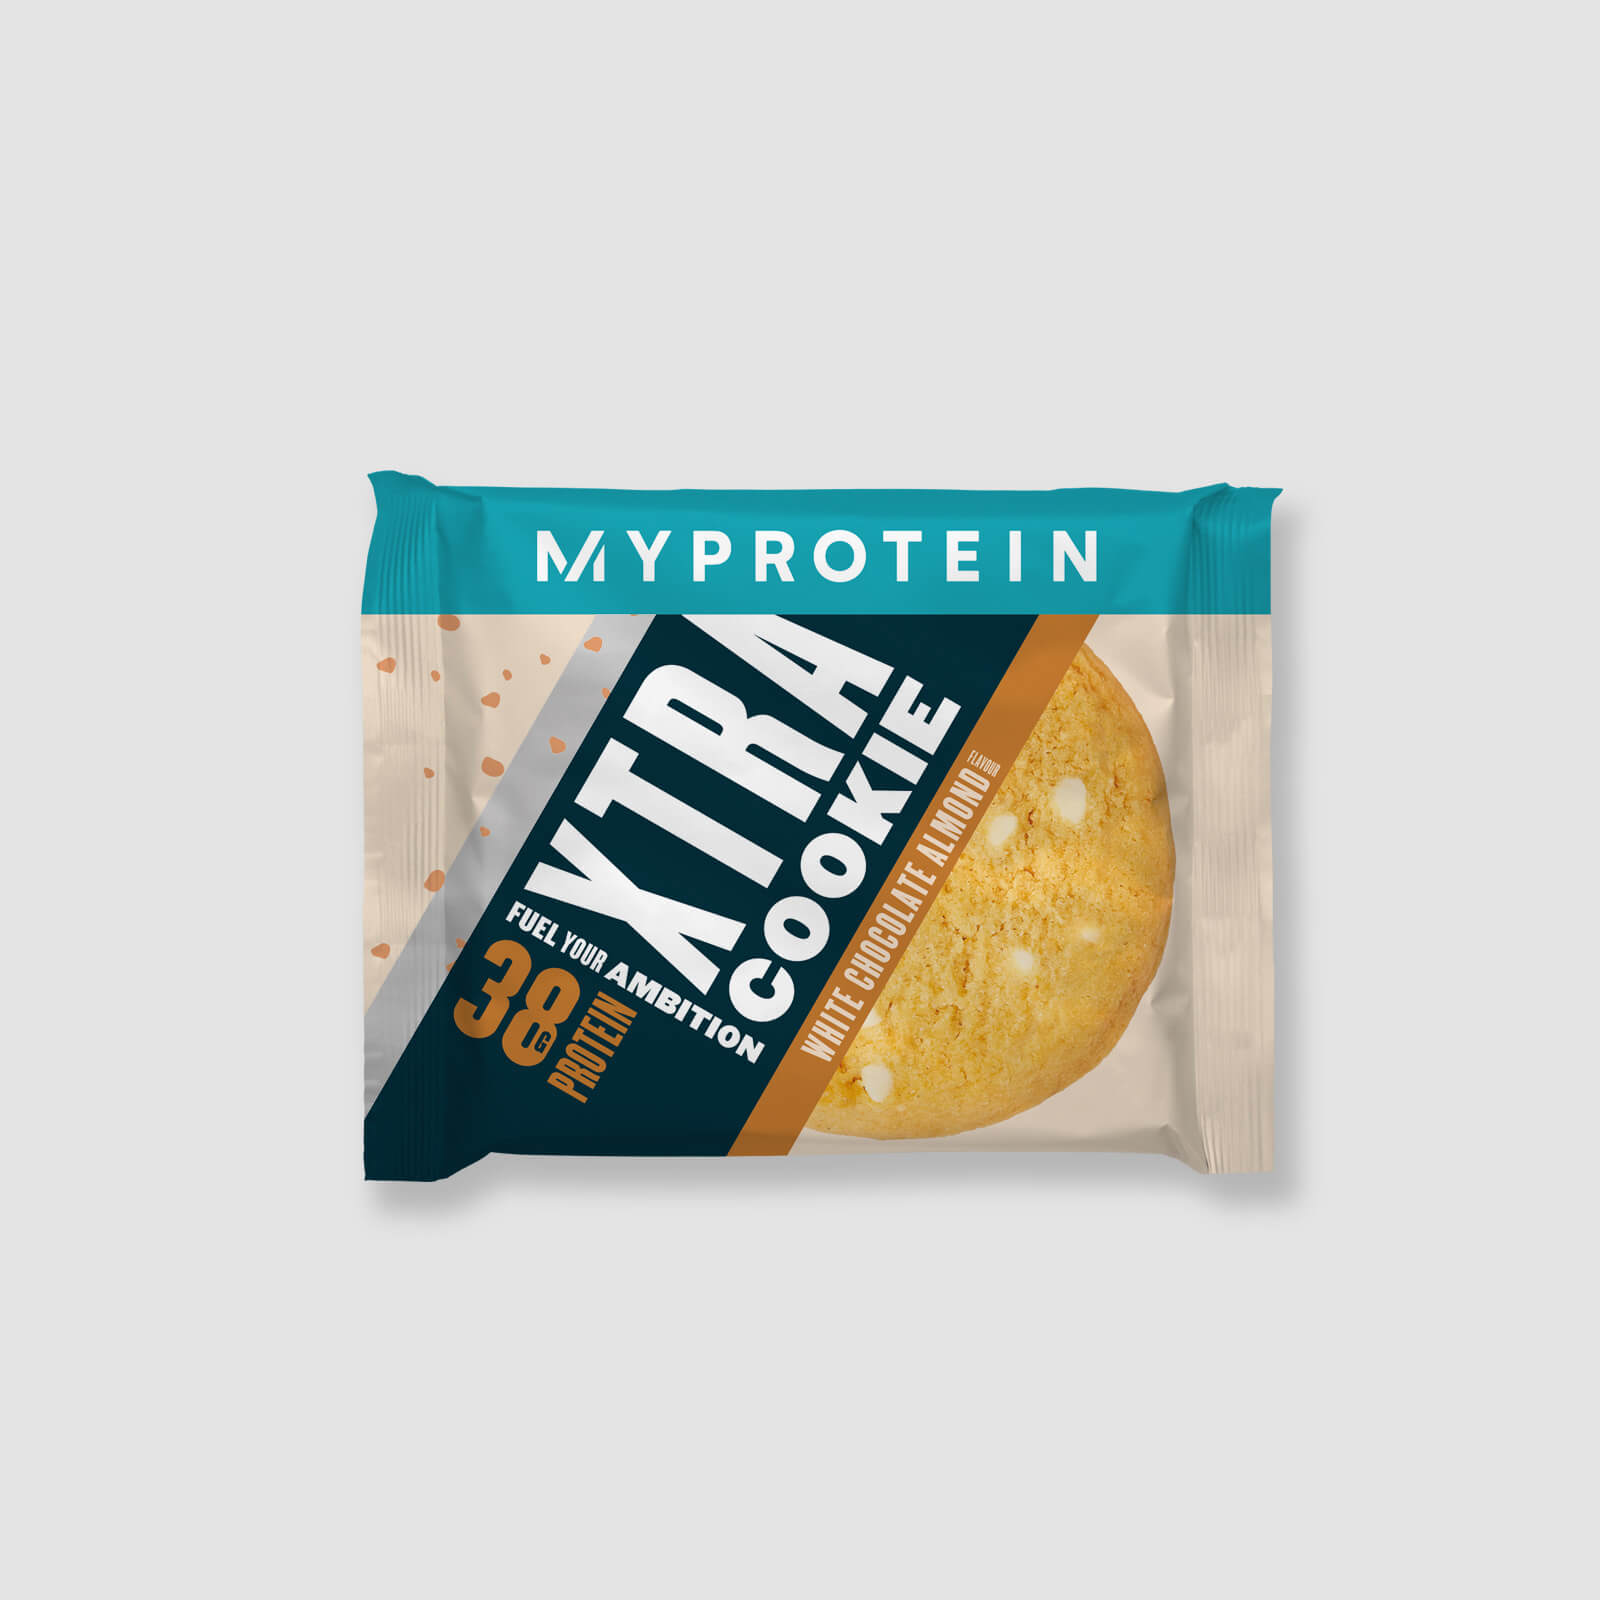 Myprotein Protein Cookie (Sample) - White Chocolate Almond